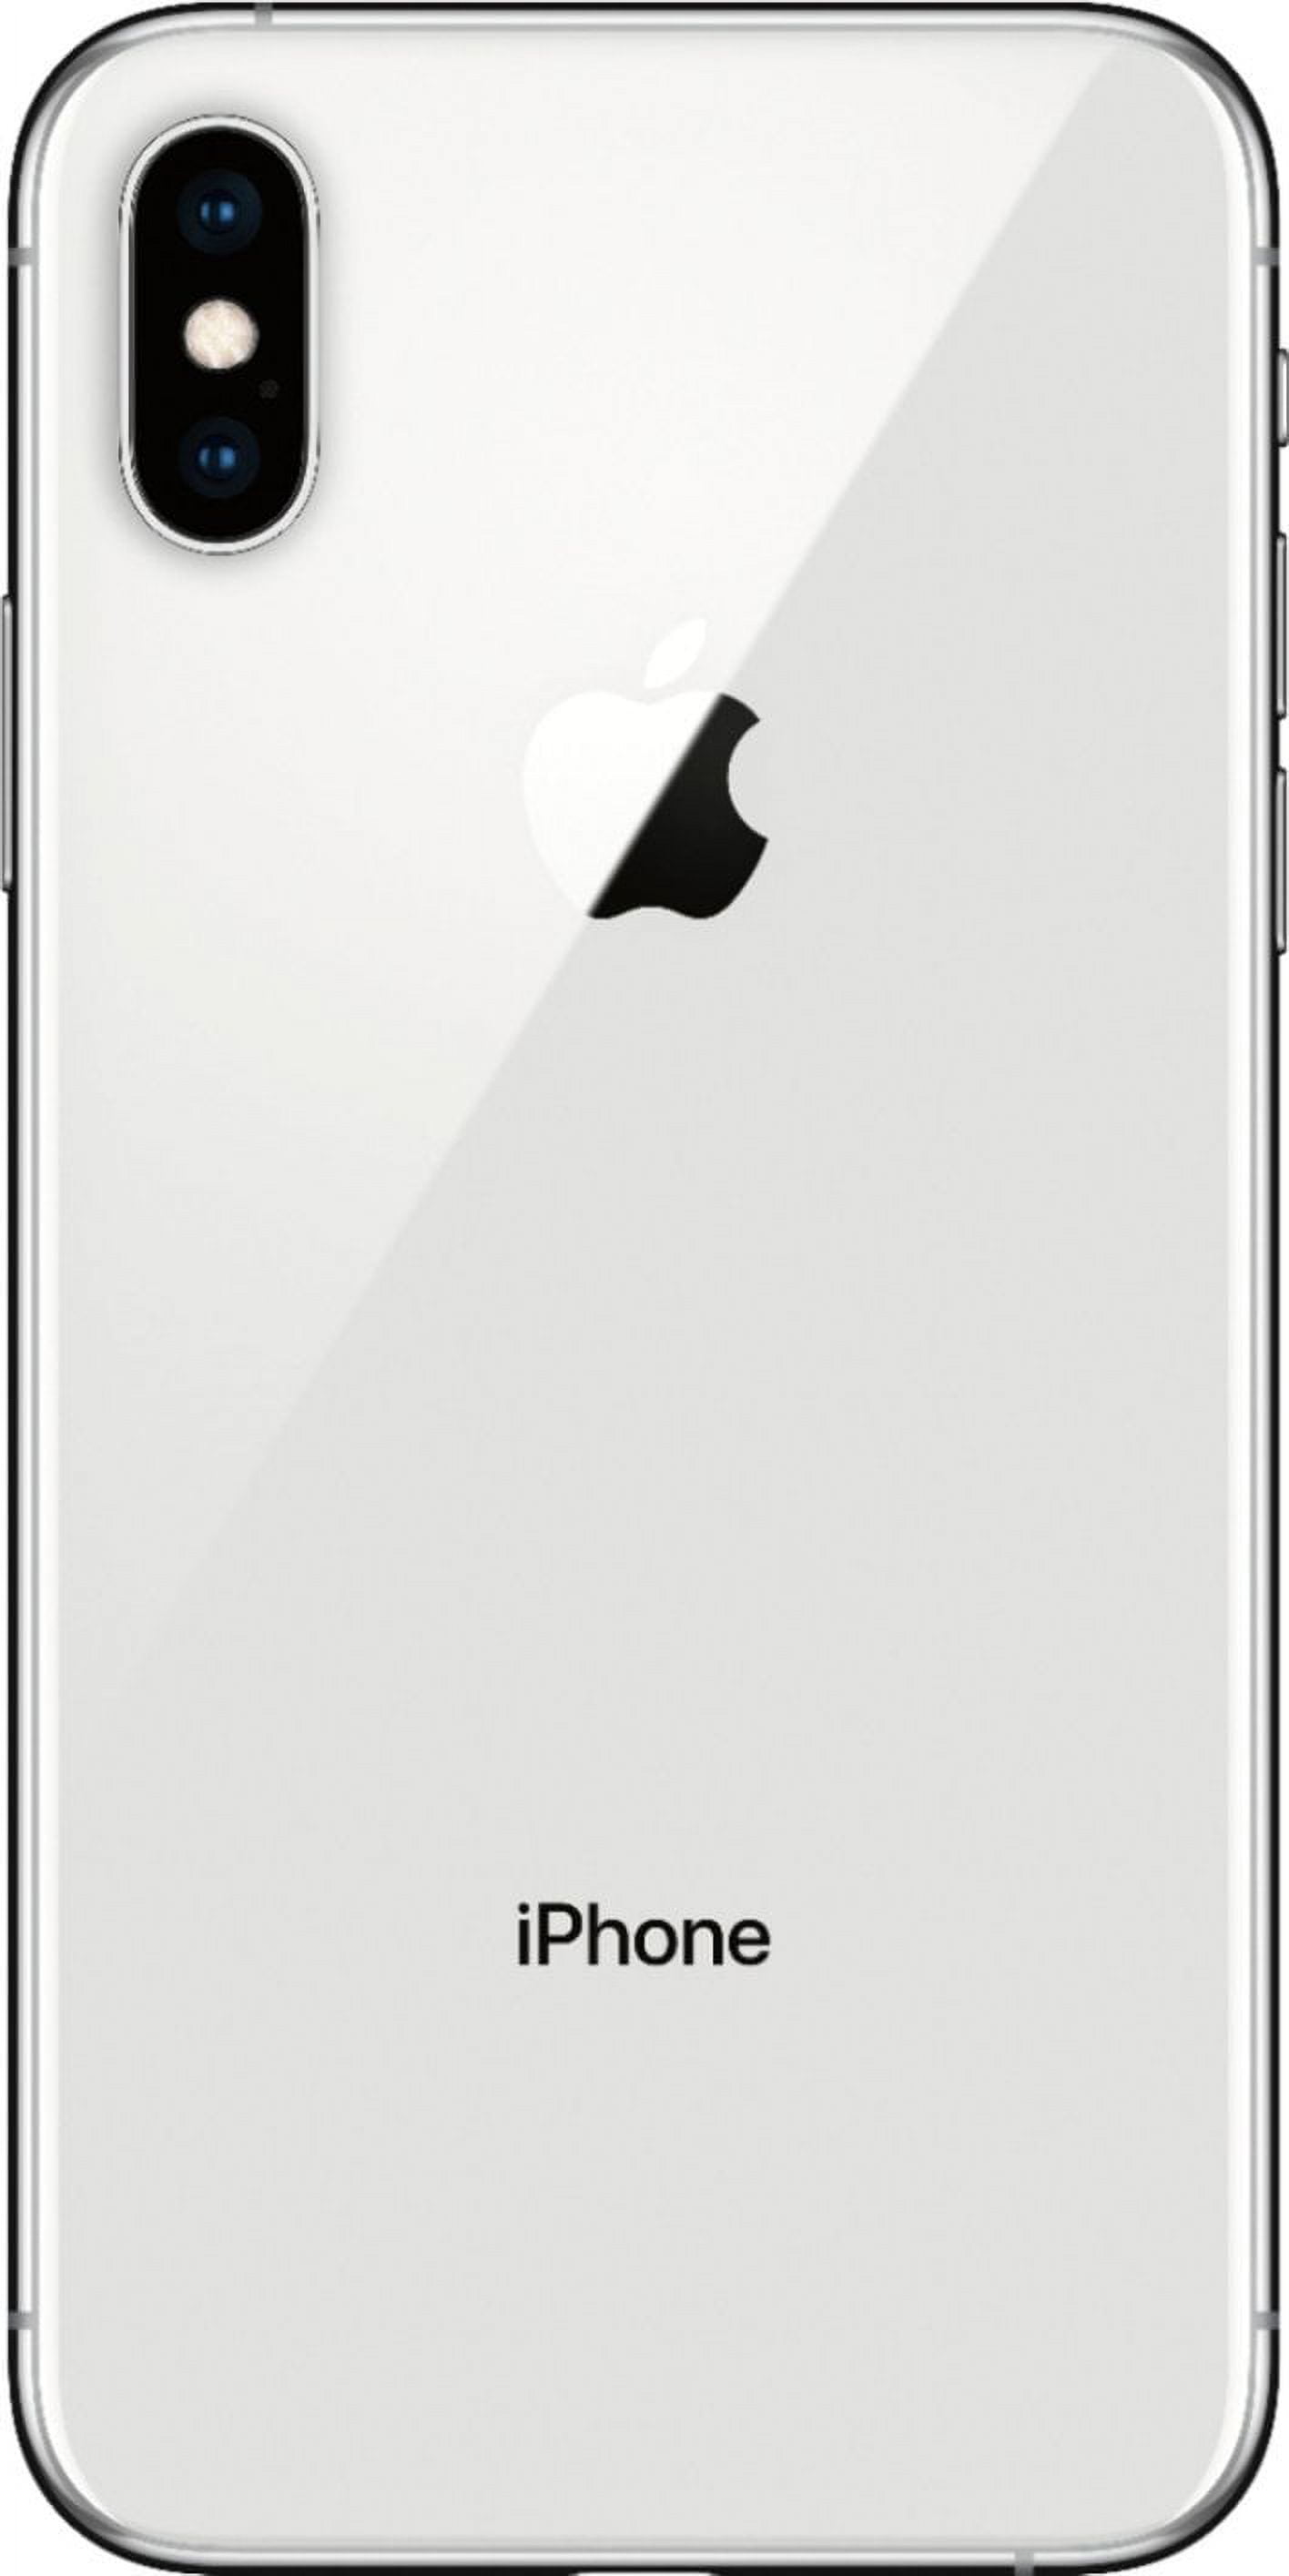 正規取扱店紹介 iPhone Xs Silver 64 GB Softbank | solinvet.com